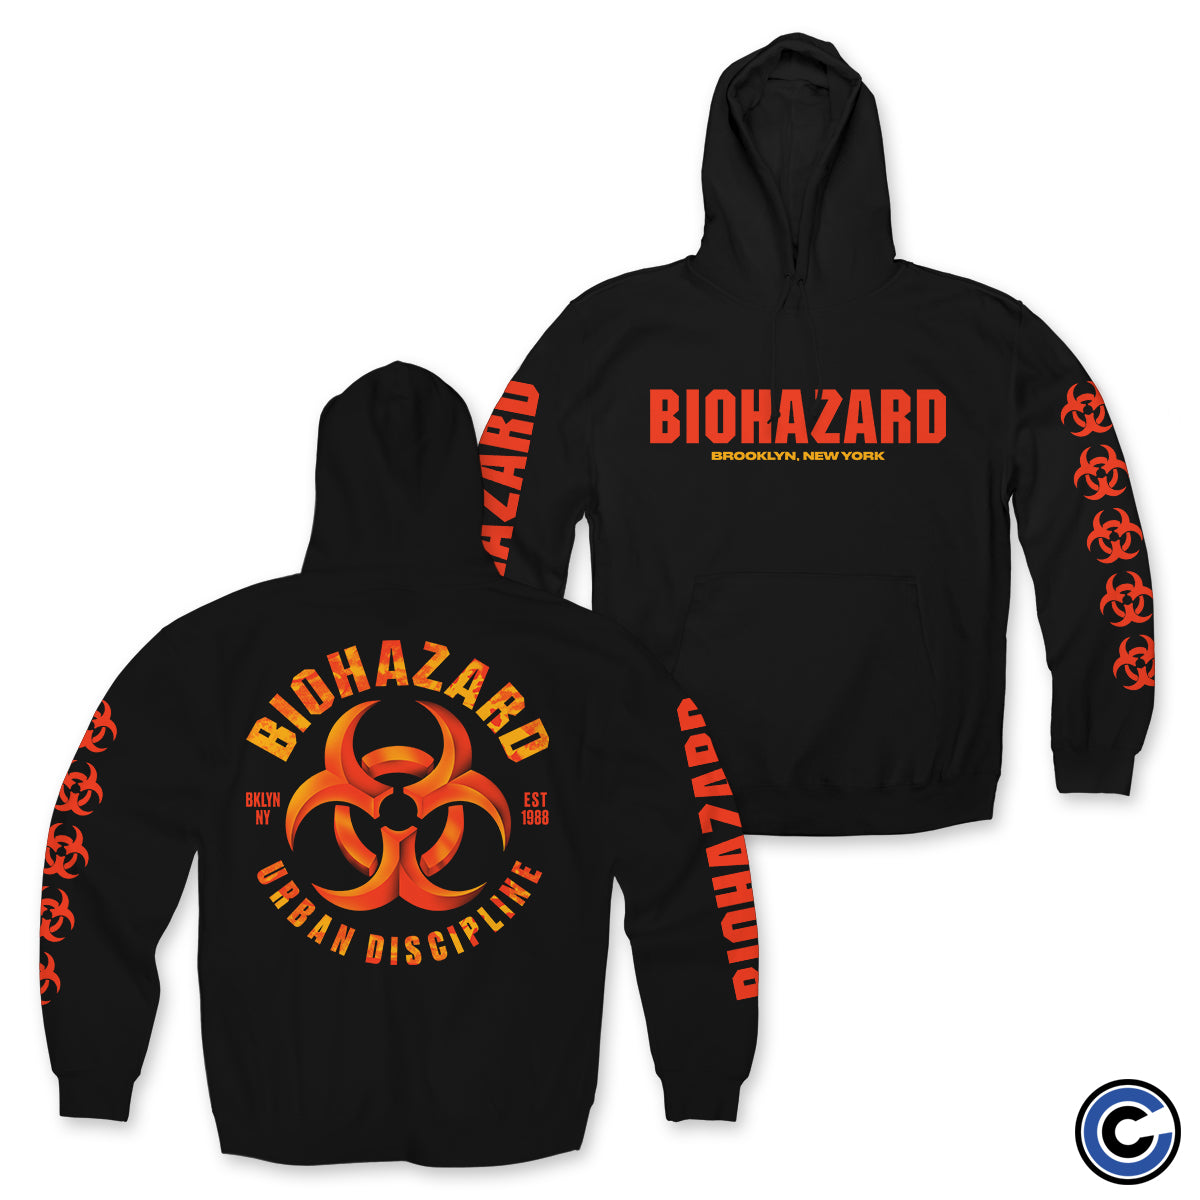 Biohazard "Hazardous" Hoodie